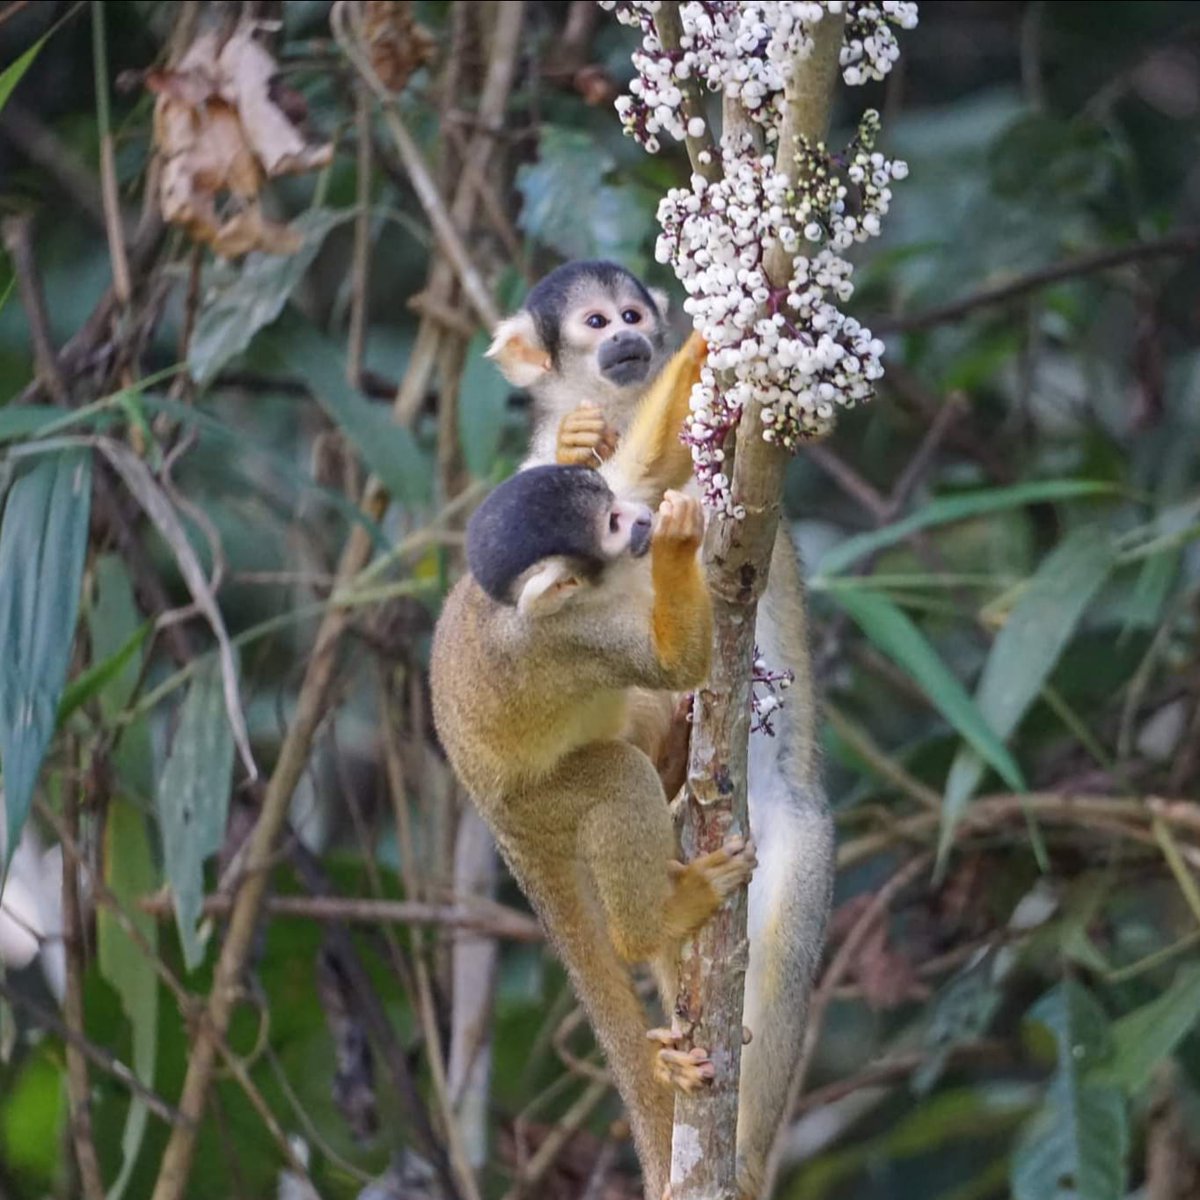 An unusually quiet moment with squirrel monkeys! #Peru #fieldwork #biodiversity #monkeys #primatology https://t.co/Ddc2UNX8cU